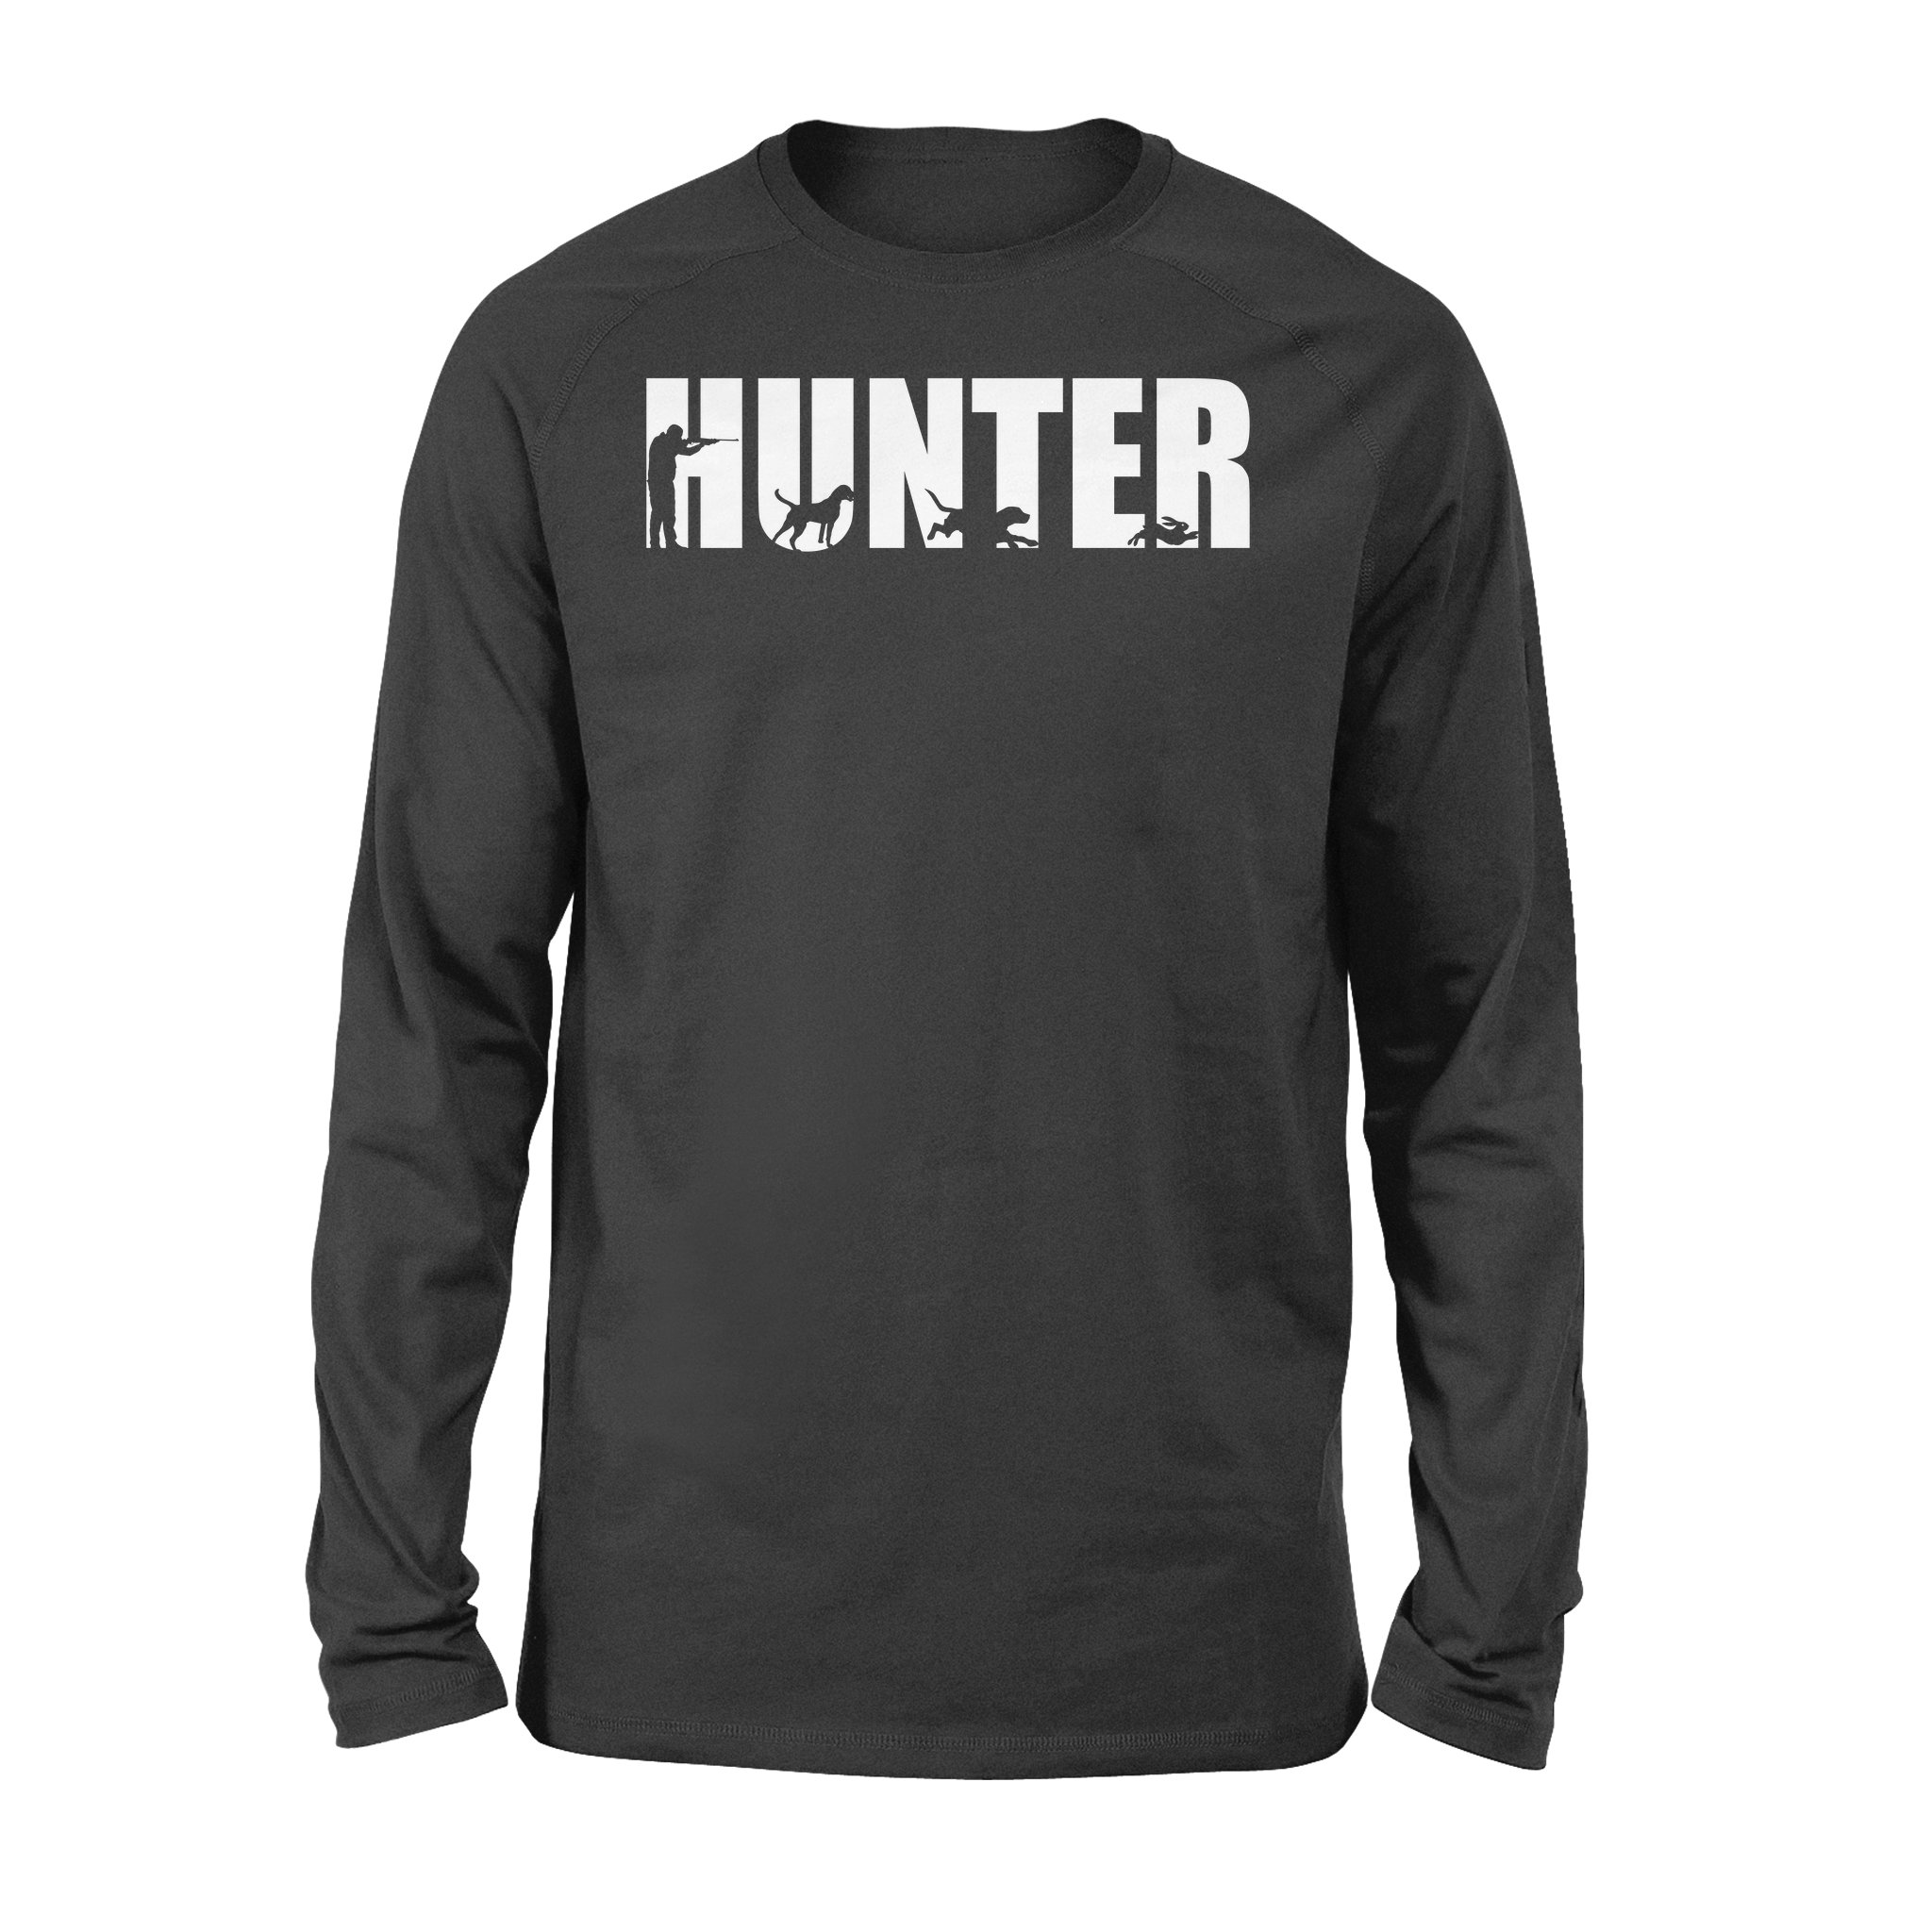 Rabbit Hunter Long Sleeve Shirt Rabbit Hunting With Beagle, Hunting Dog Hound Dog Gift For Hunters – Fsd1379D06